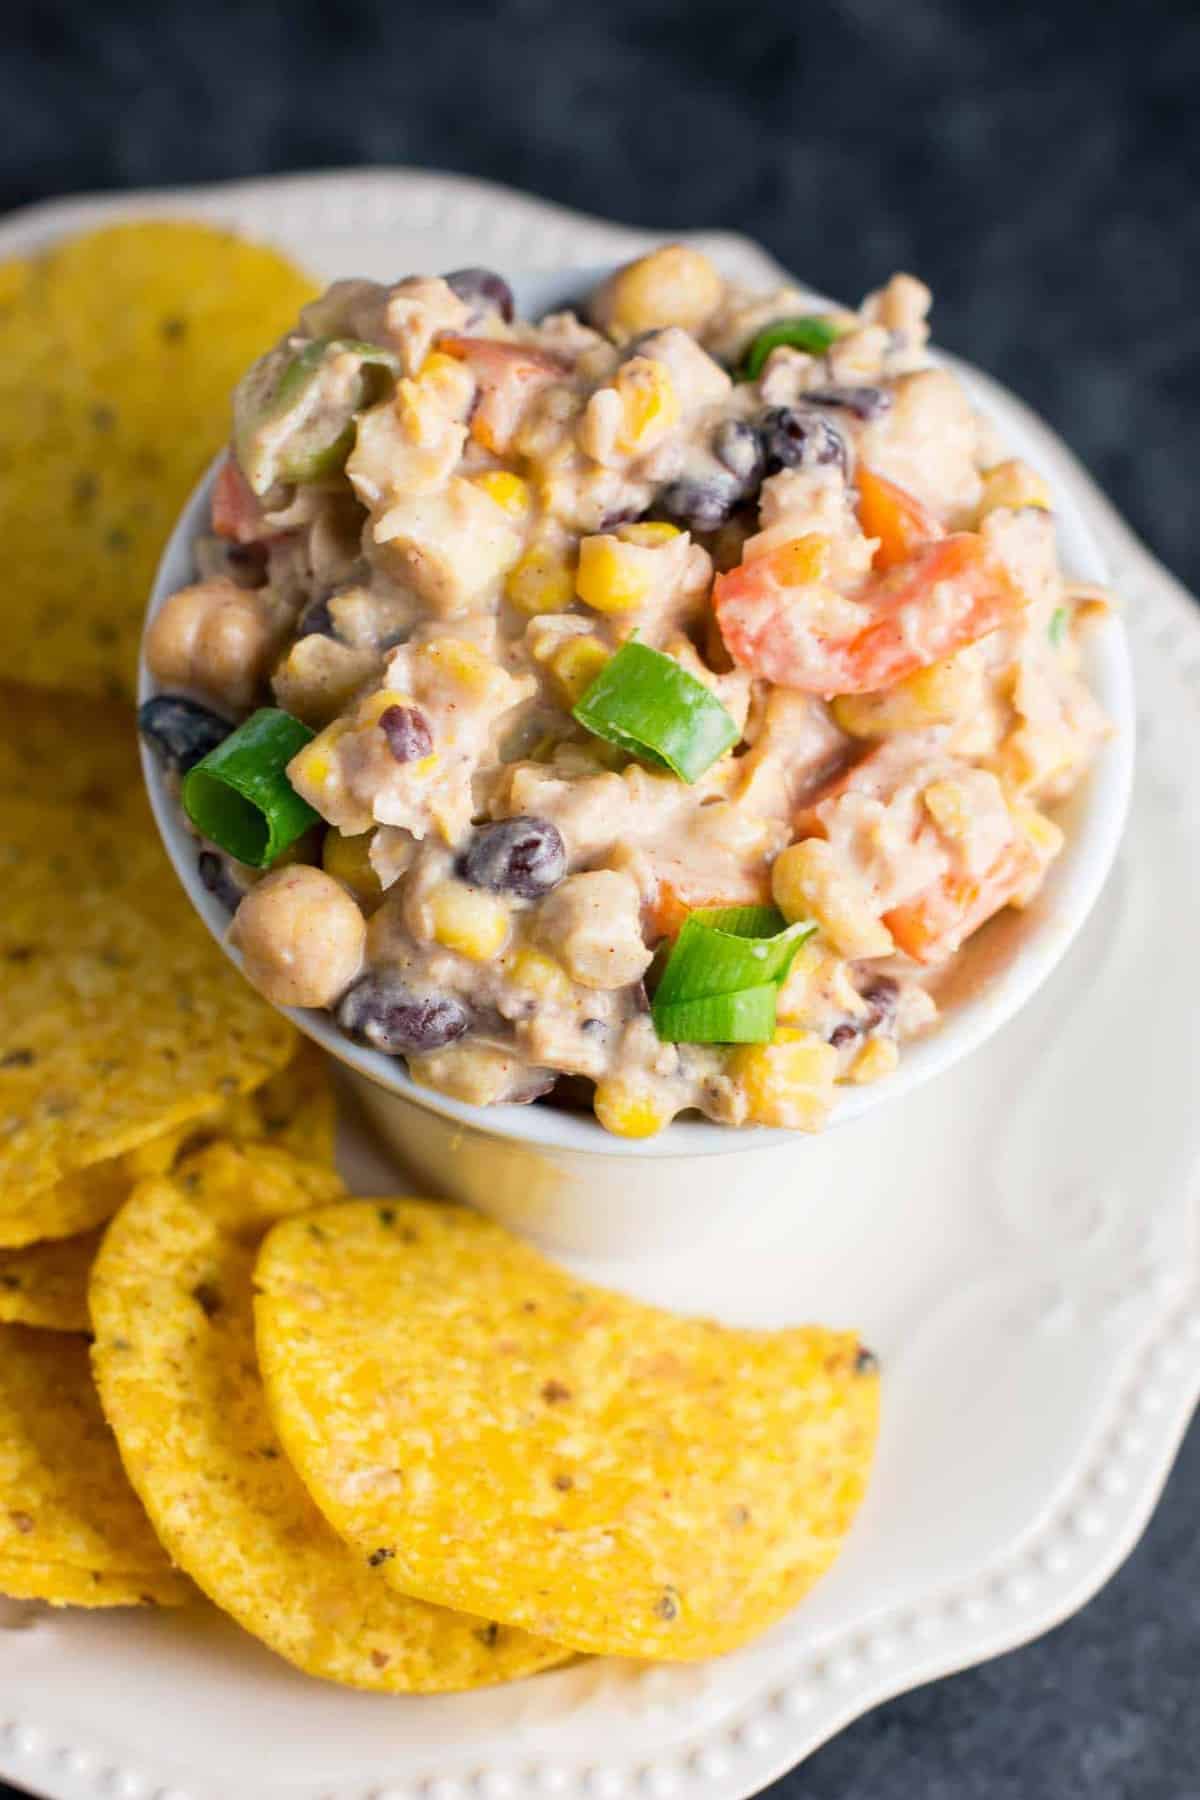 skinny mexican chickpea salad dip - recipe via @buildyourbite